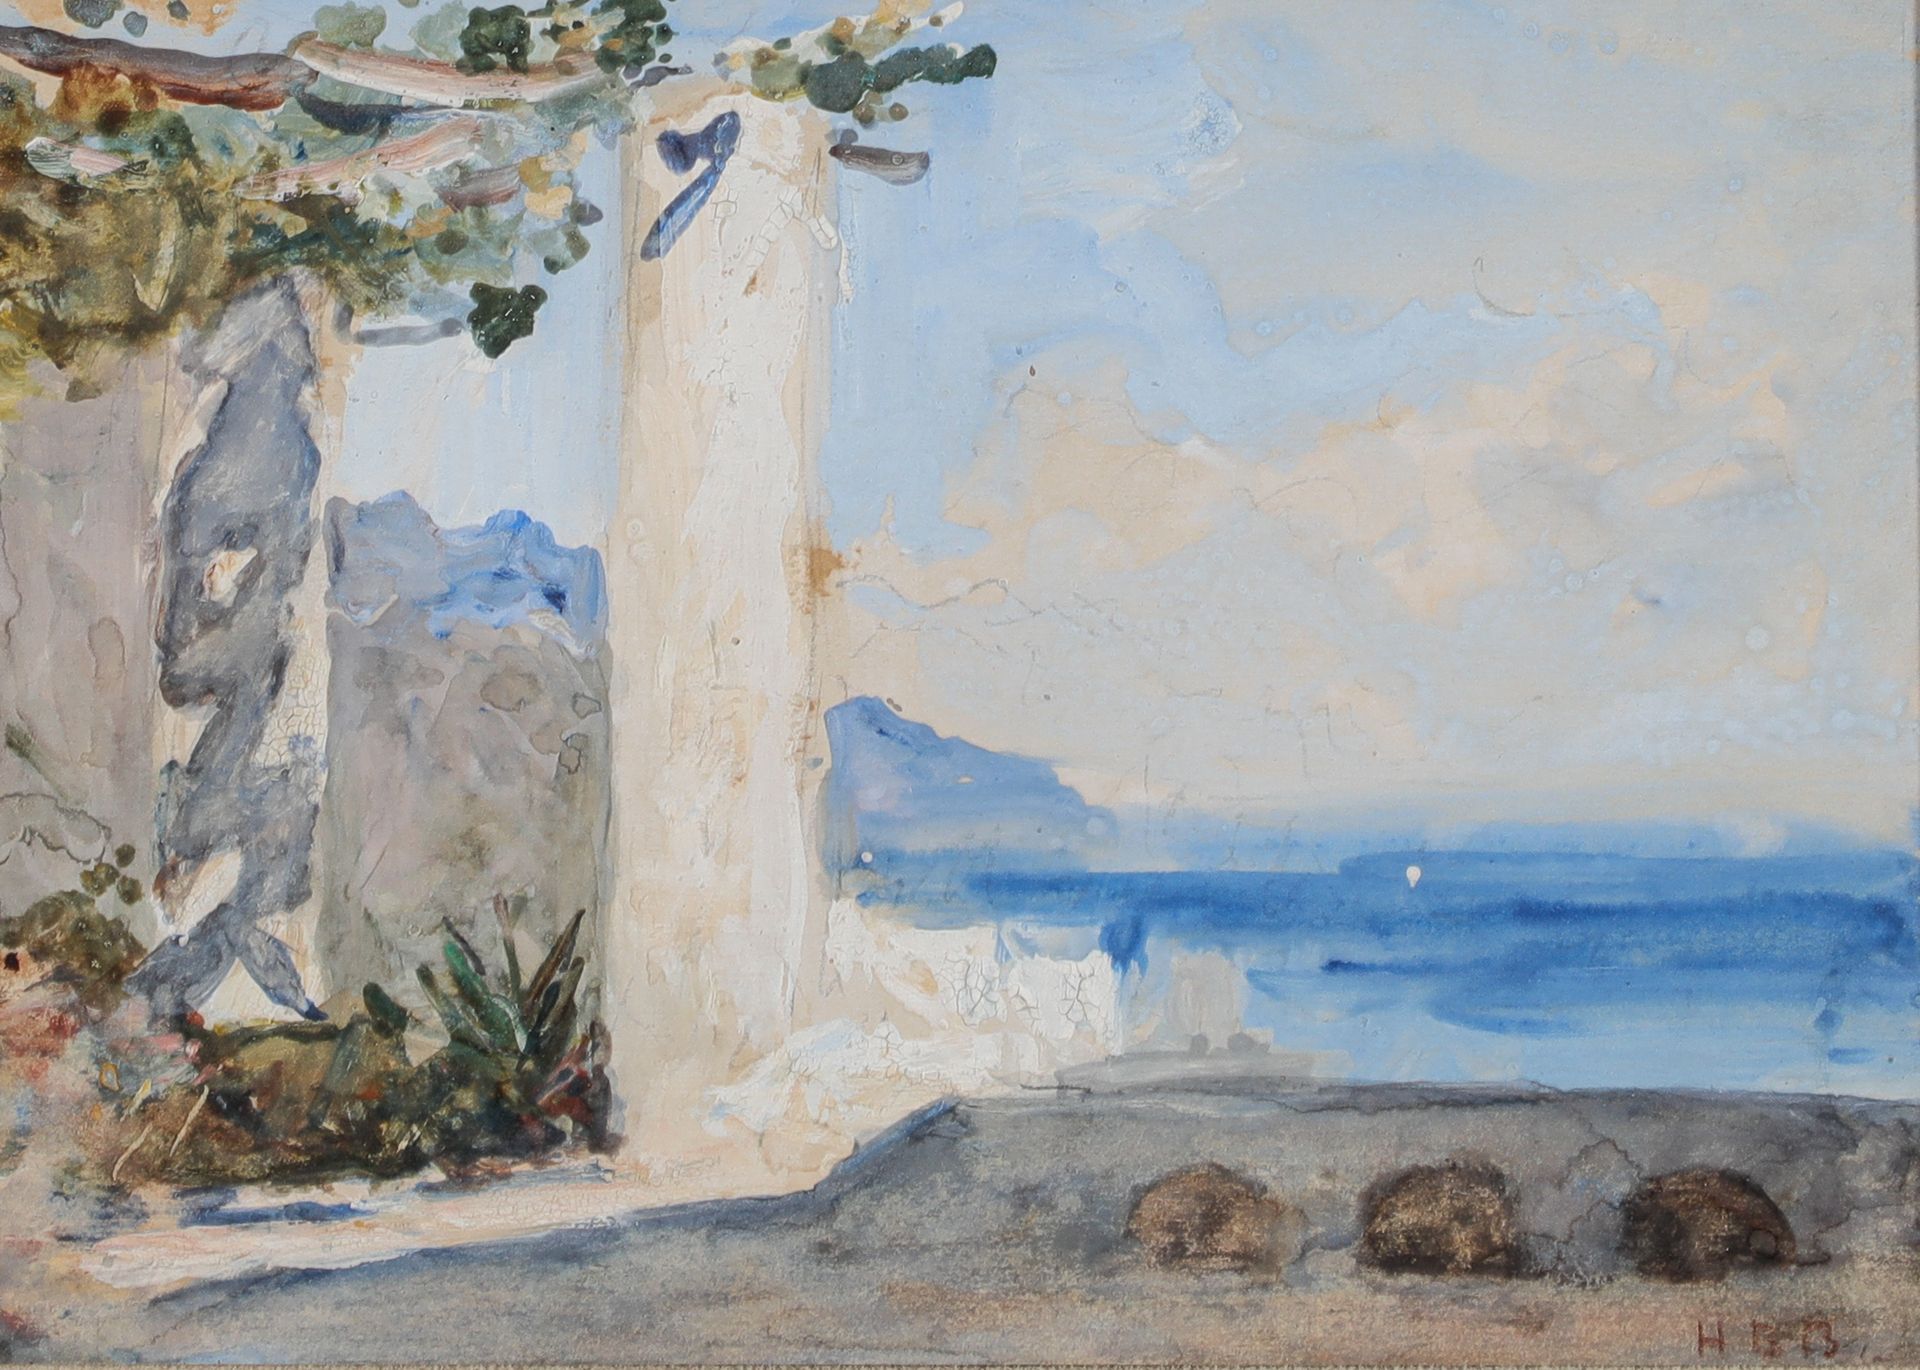 Null 归功于赫拉克勒斯-B。Brabazon (1821-1906)
地中海风景 
水粉画，纸上，右下角有文字说明 
19 x 26,5 cm